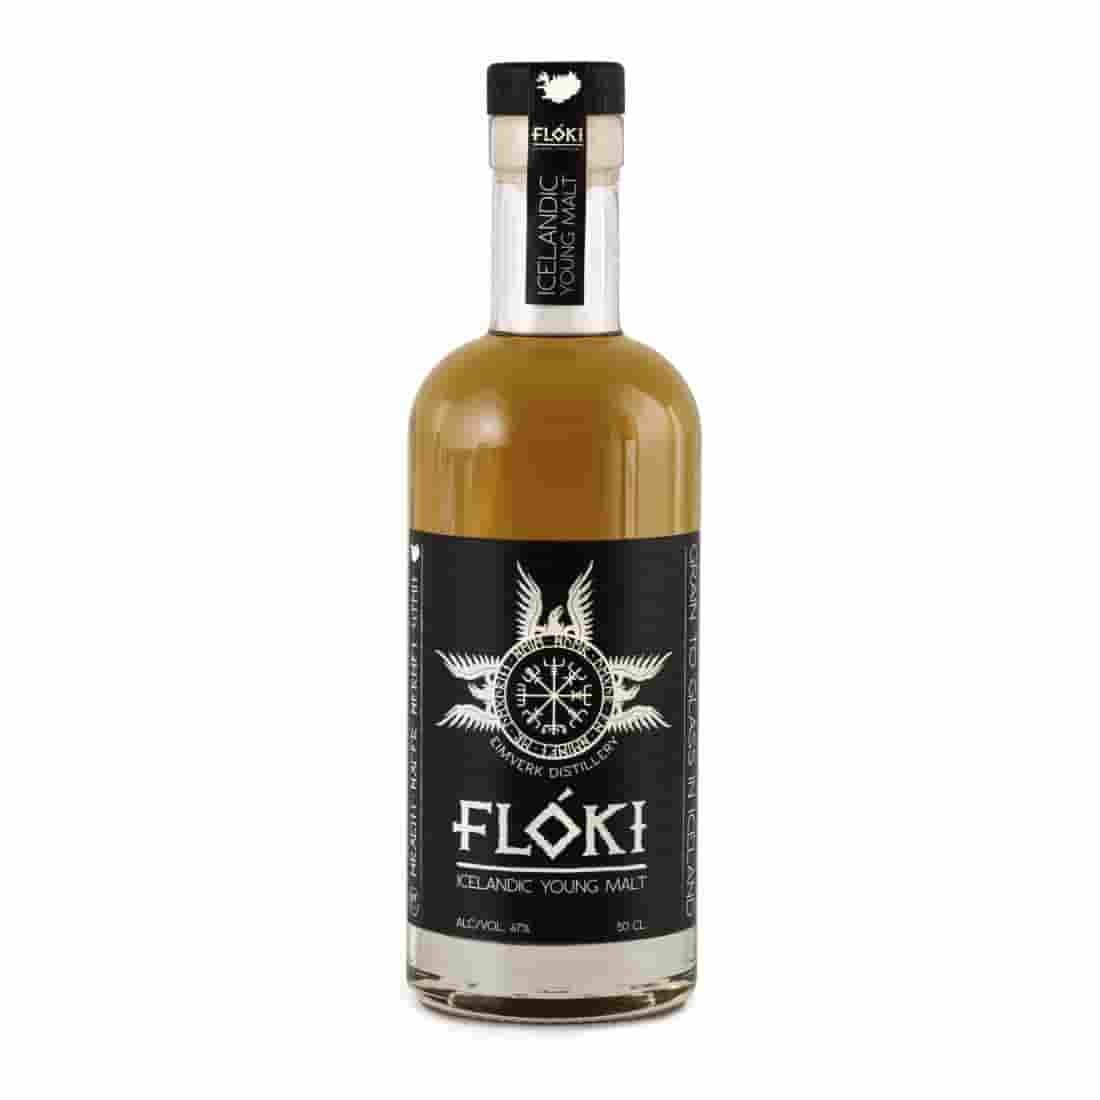 FLÓKI Young Malt Whisky (50 cl.) - nammi.is